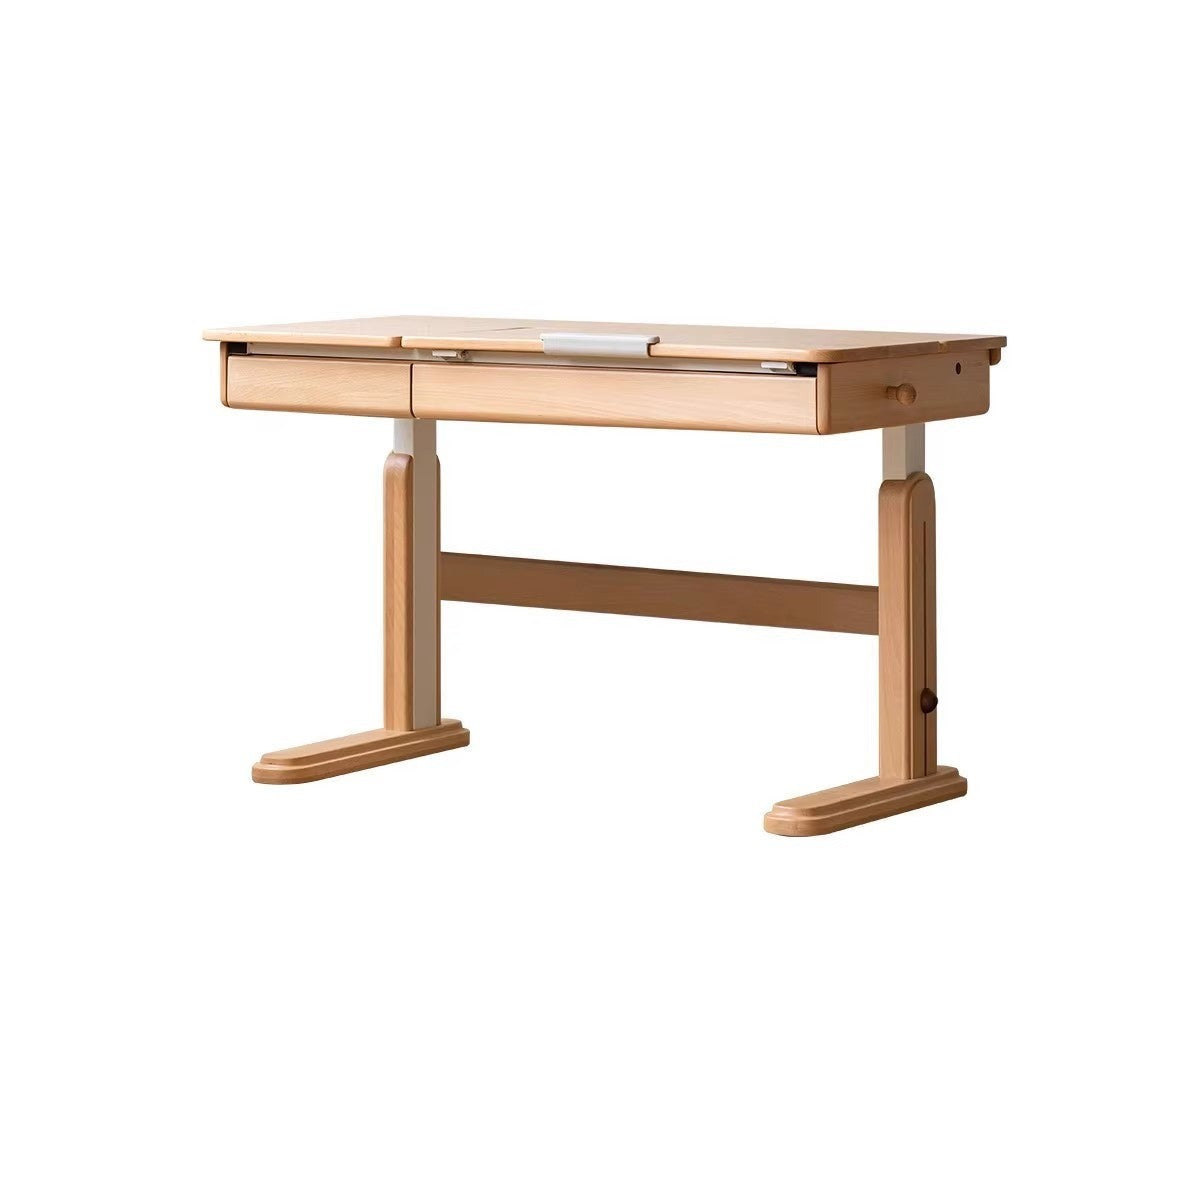 Beech solid wood children's study adaptive desktop, lifting table"